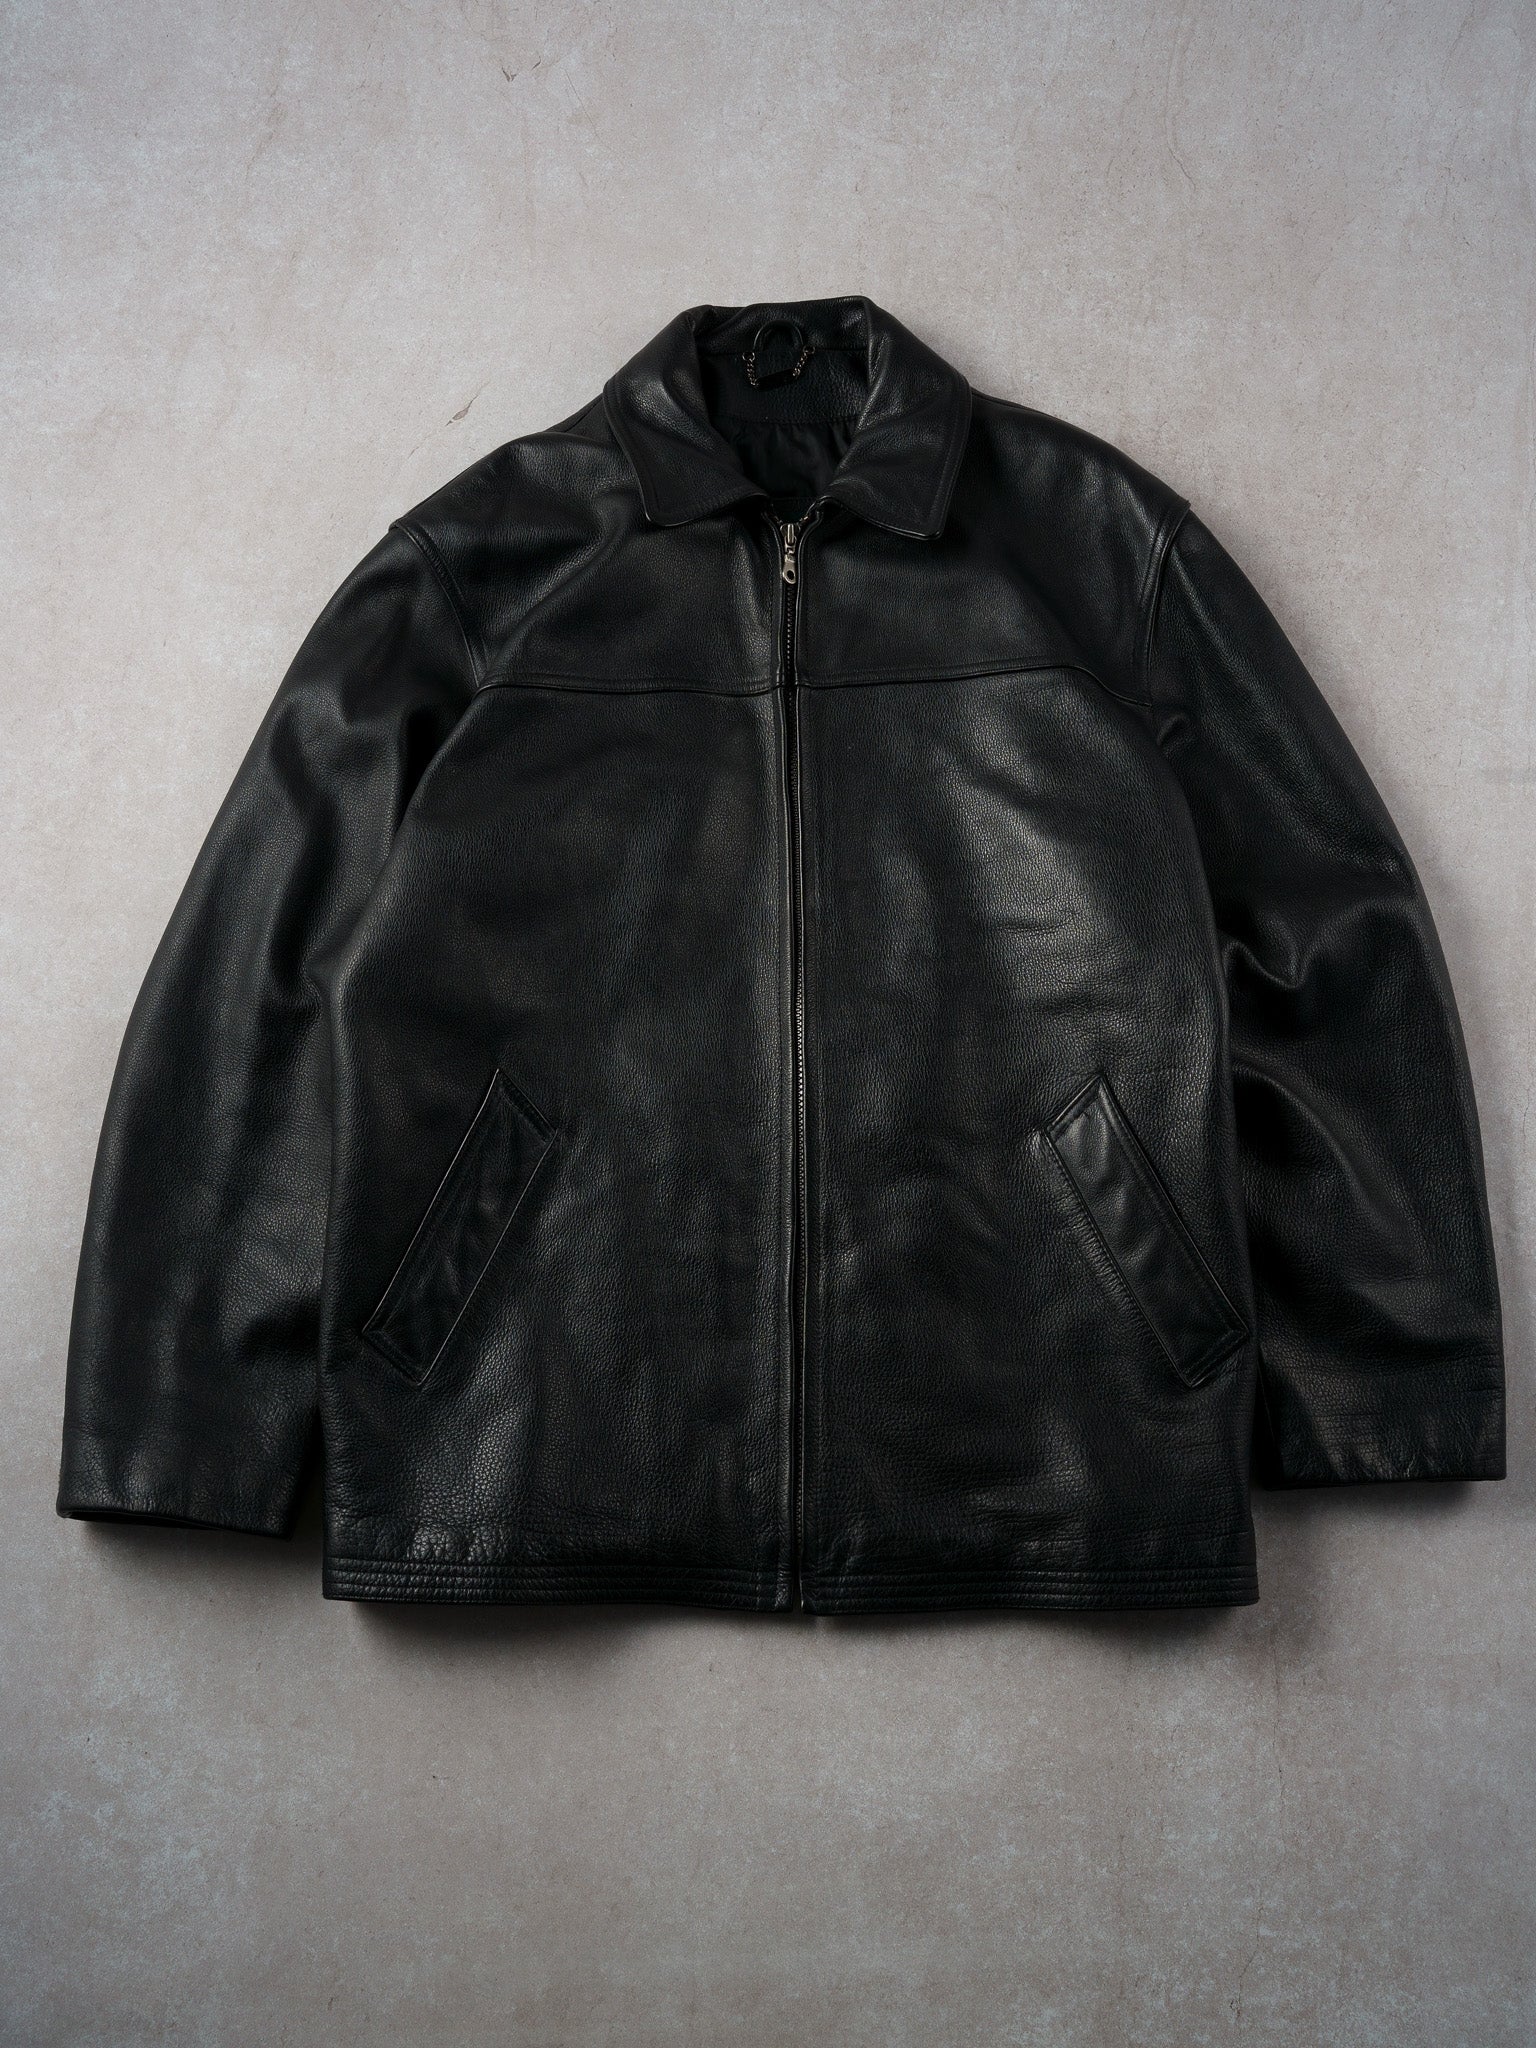 Vintage 90s Black Danier Collared Leather Jacket (M)